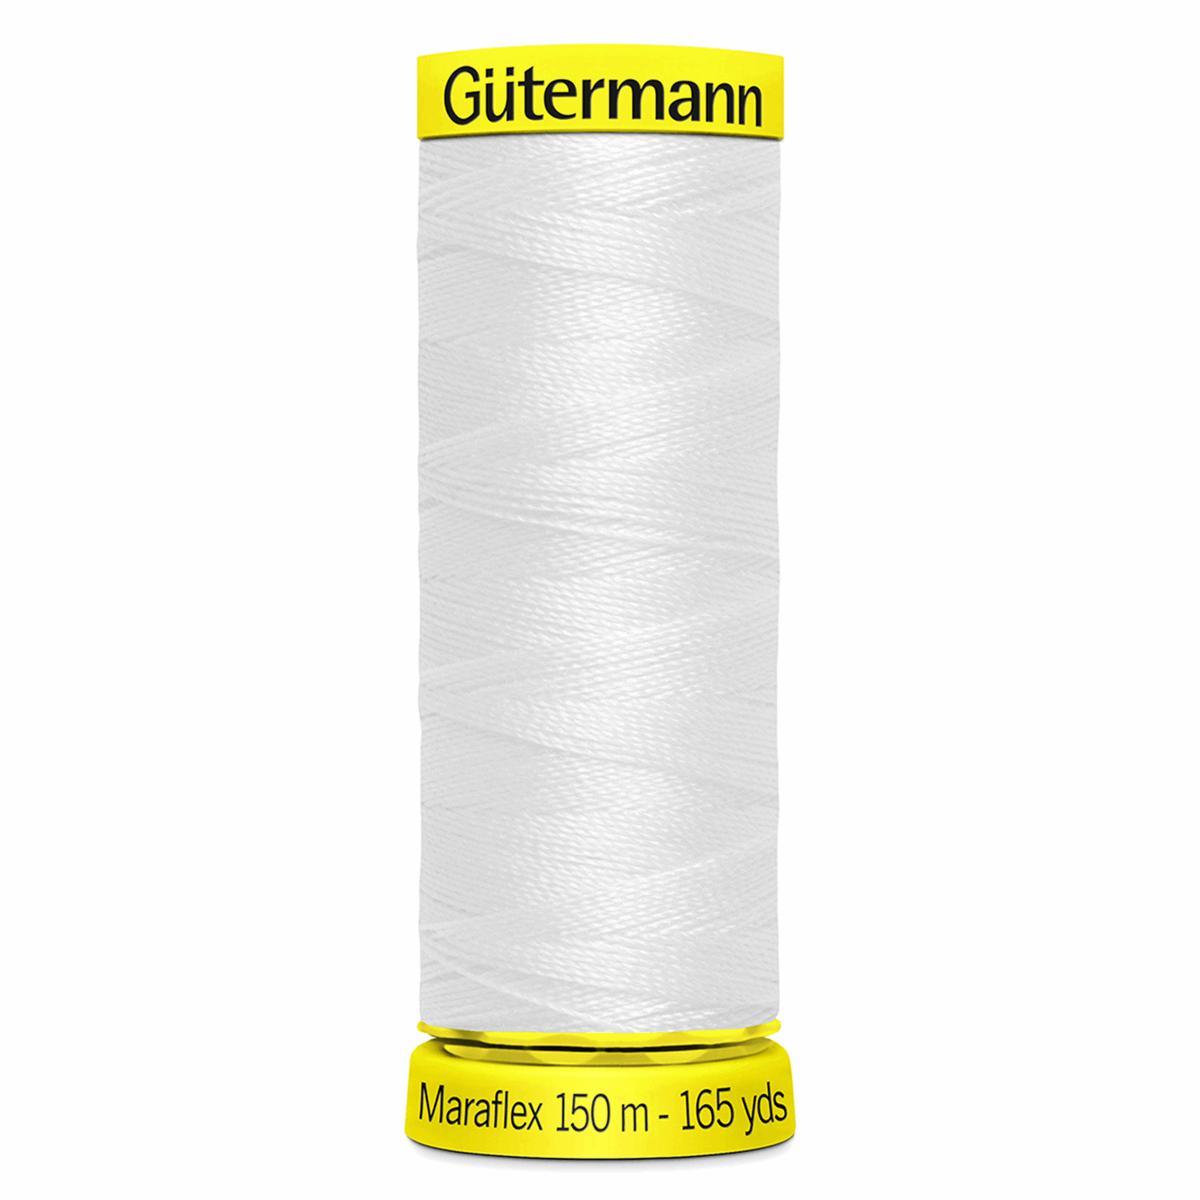 Gutermann Maraflex Elastic Sewing Thread 150m White 